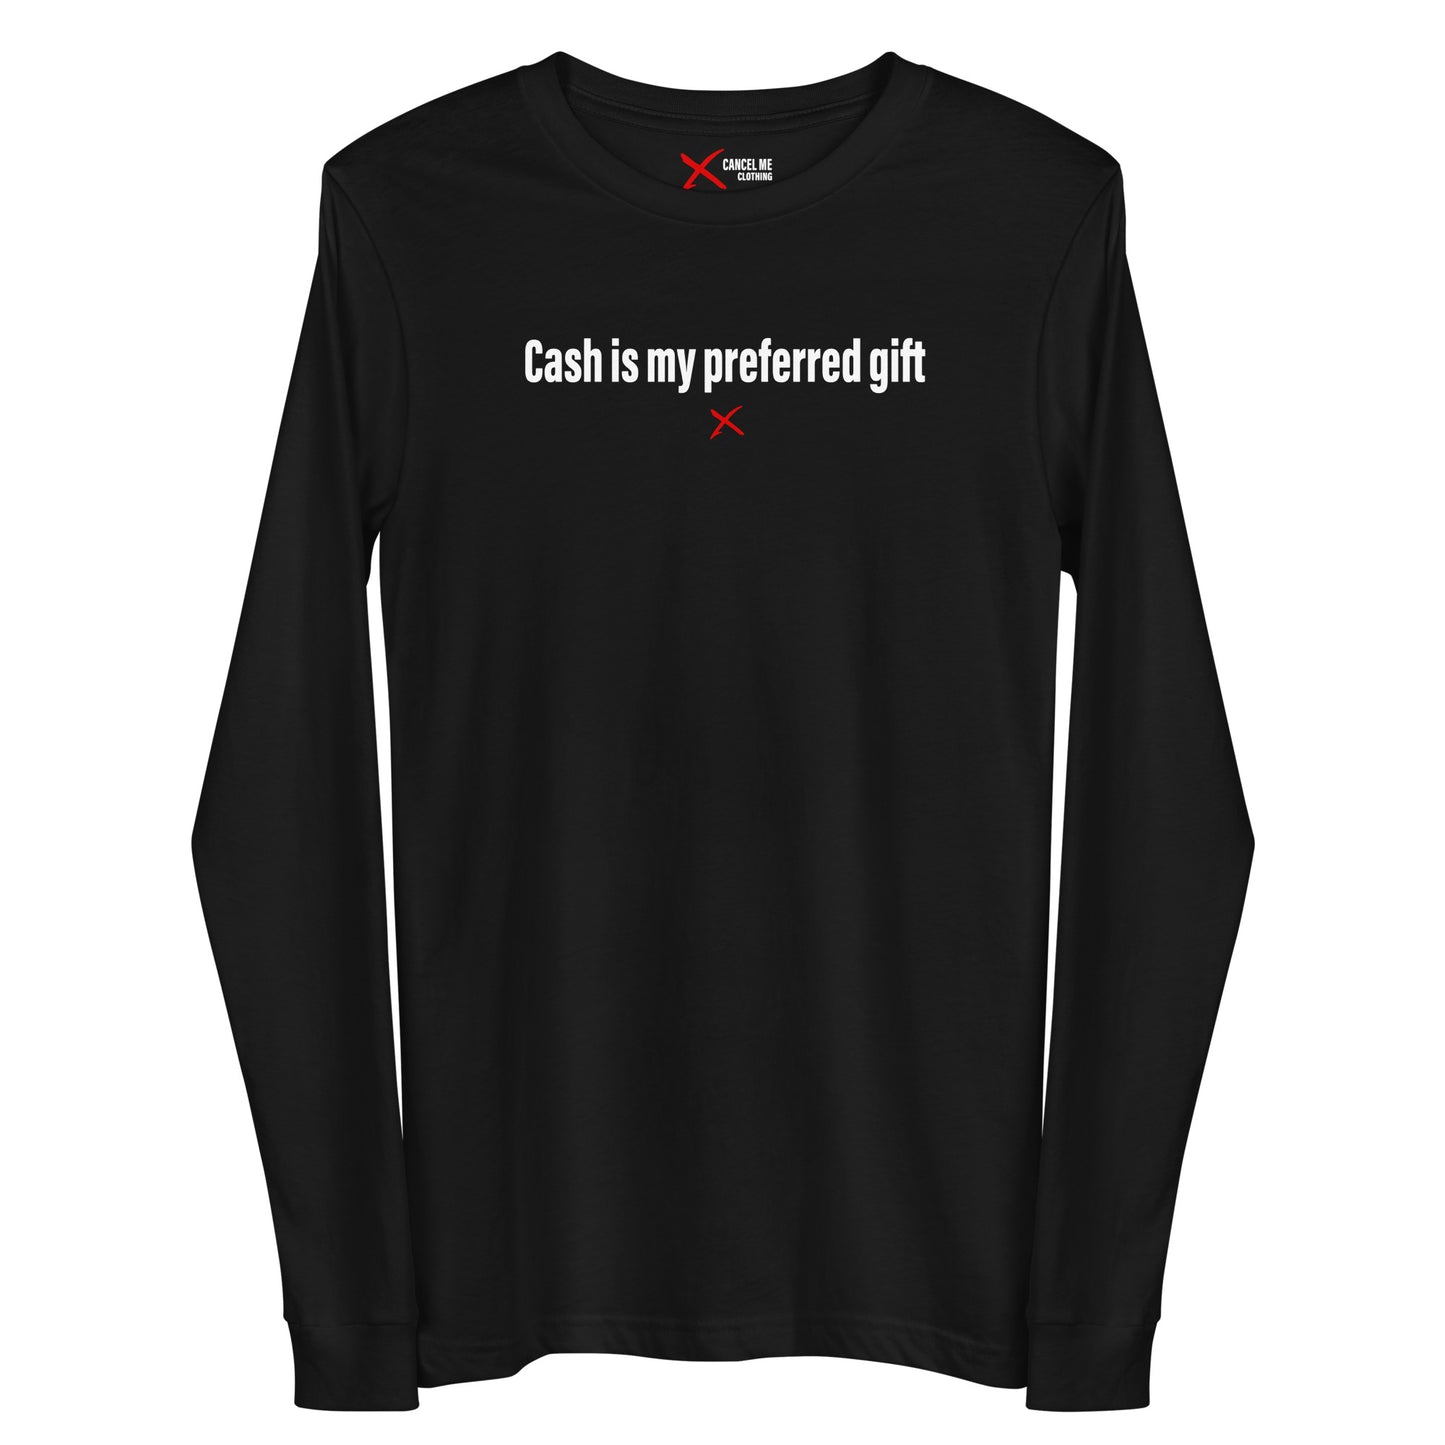 Cash is my preferred gift - Longsleeve